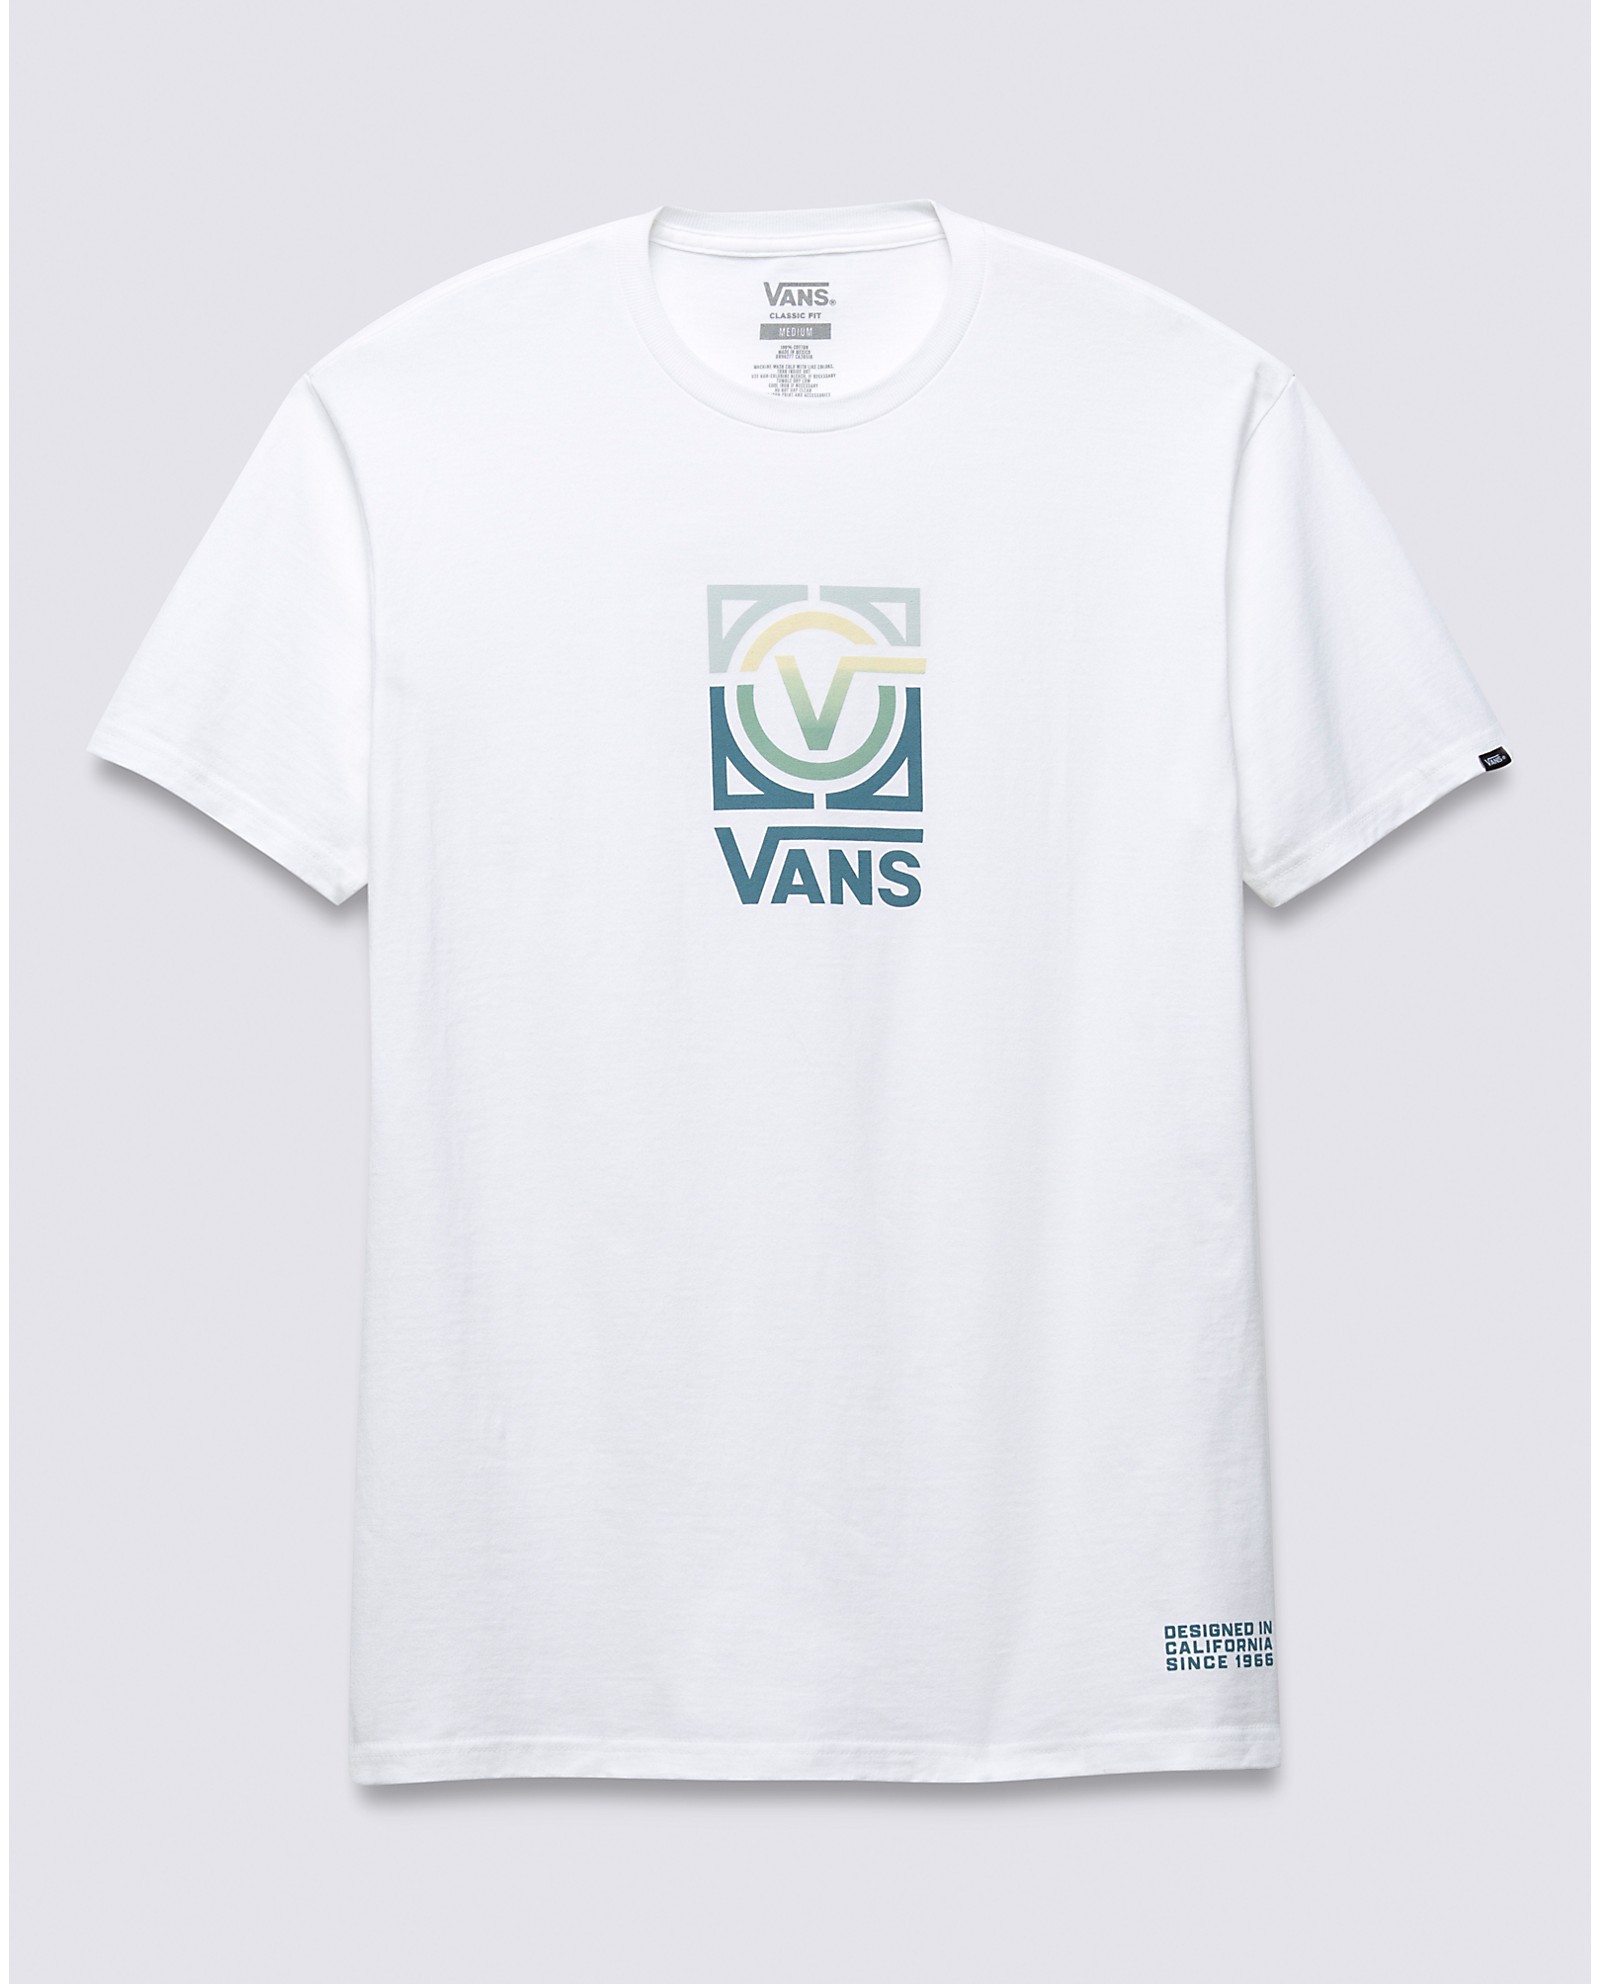 Nowa koszulka Vans Commercial DNA 1 White, rozmiar M